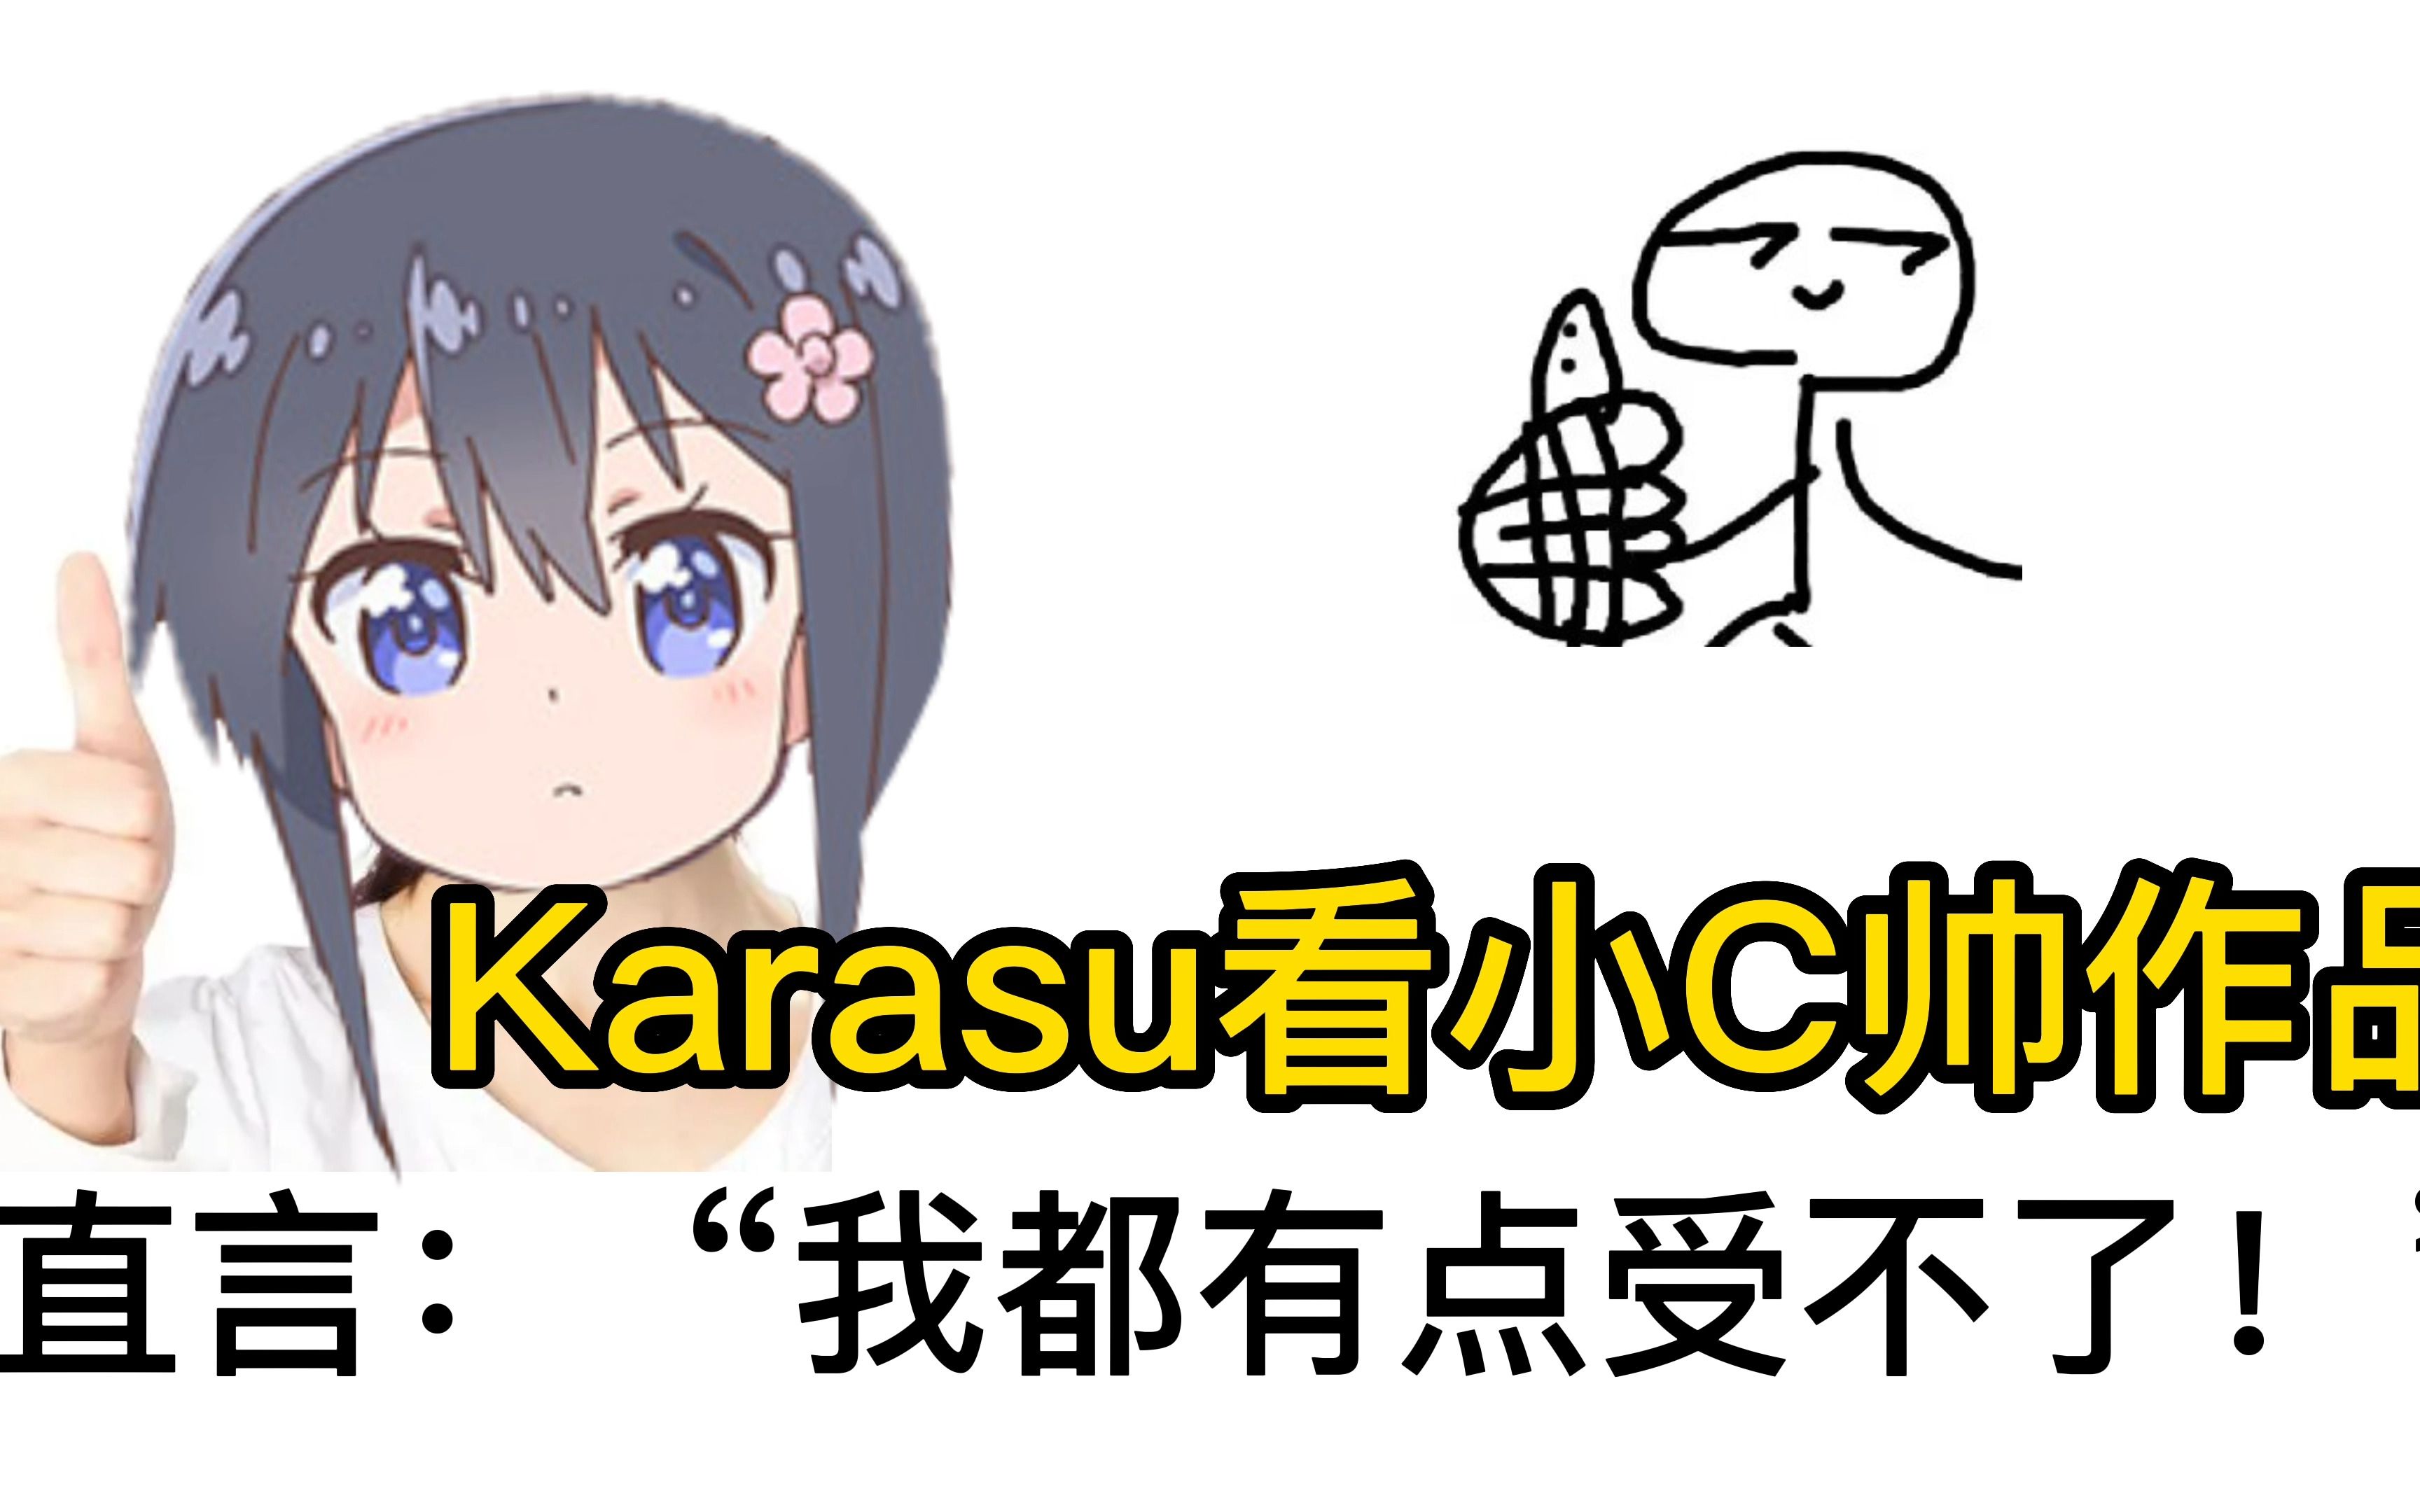 Karasu看小C帅视频，直言：“我都有点受不了了！太哈人了！”